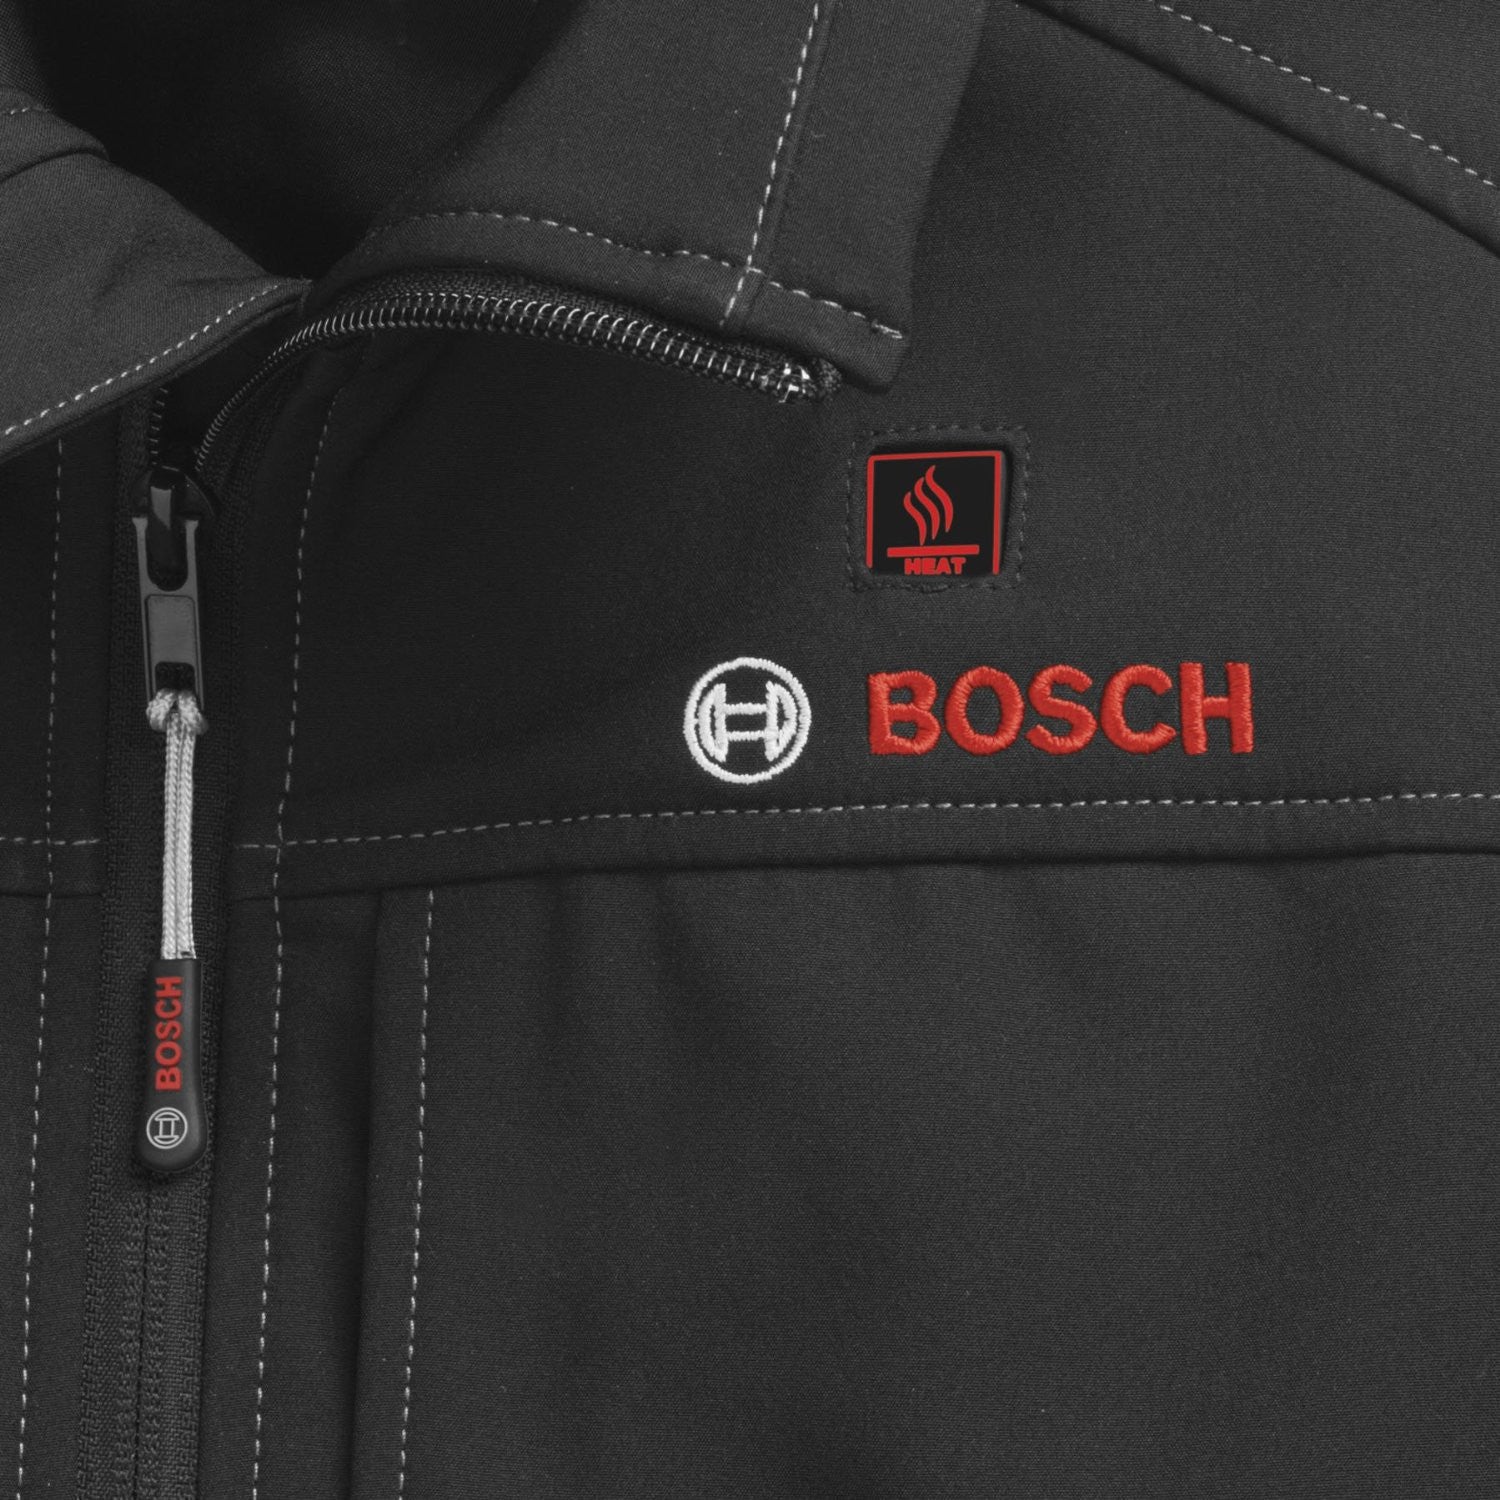 Giacca termica Heat Jacket 10,8 V (versione base) Bosch Professional